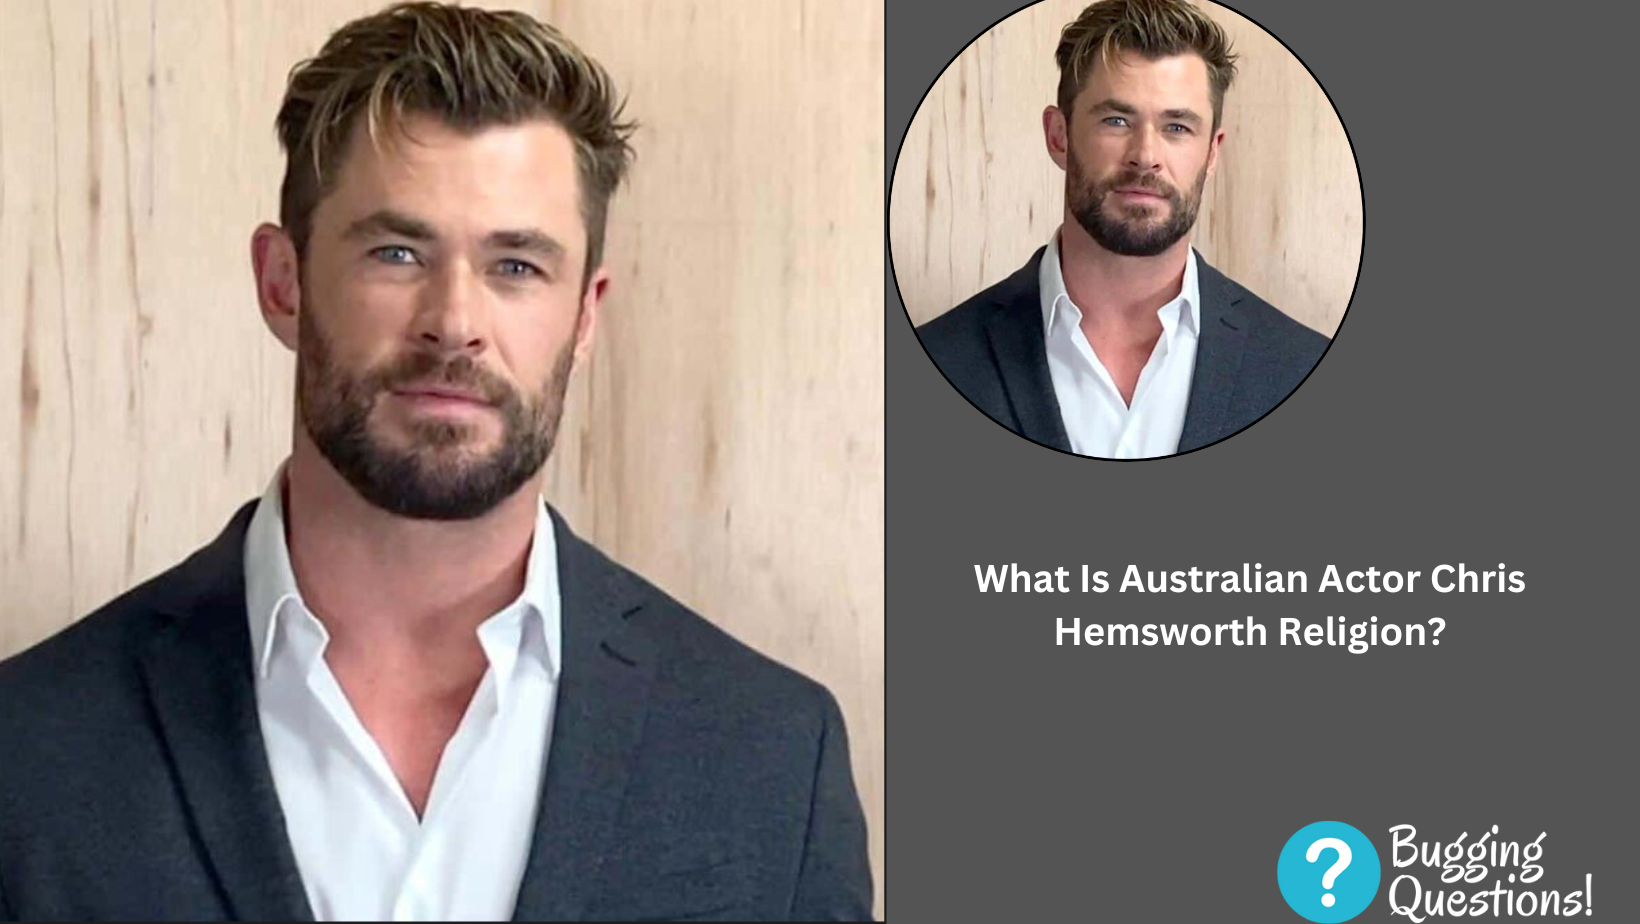 What Is Australian Actor Chris Hemsworth Religion?